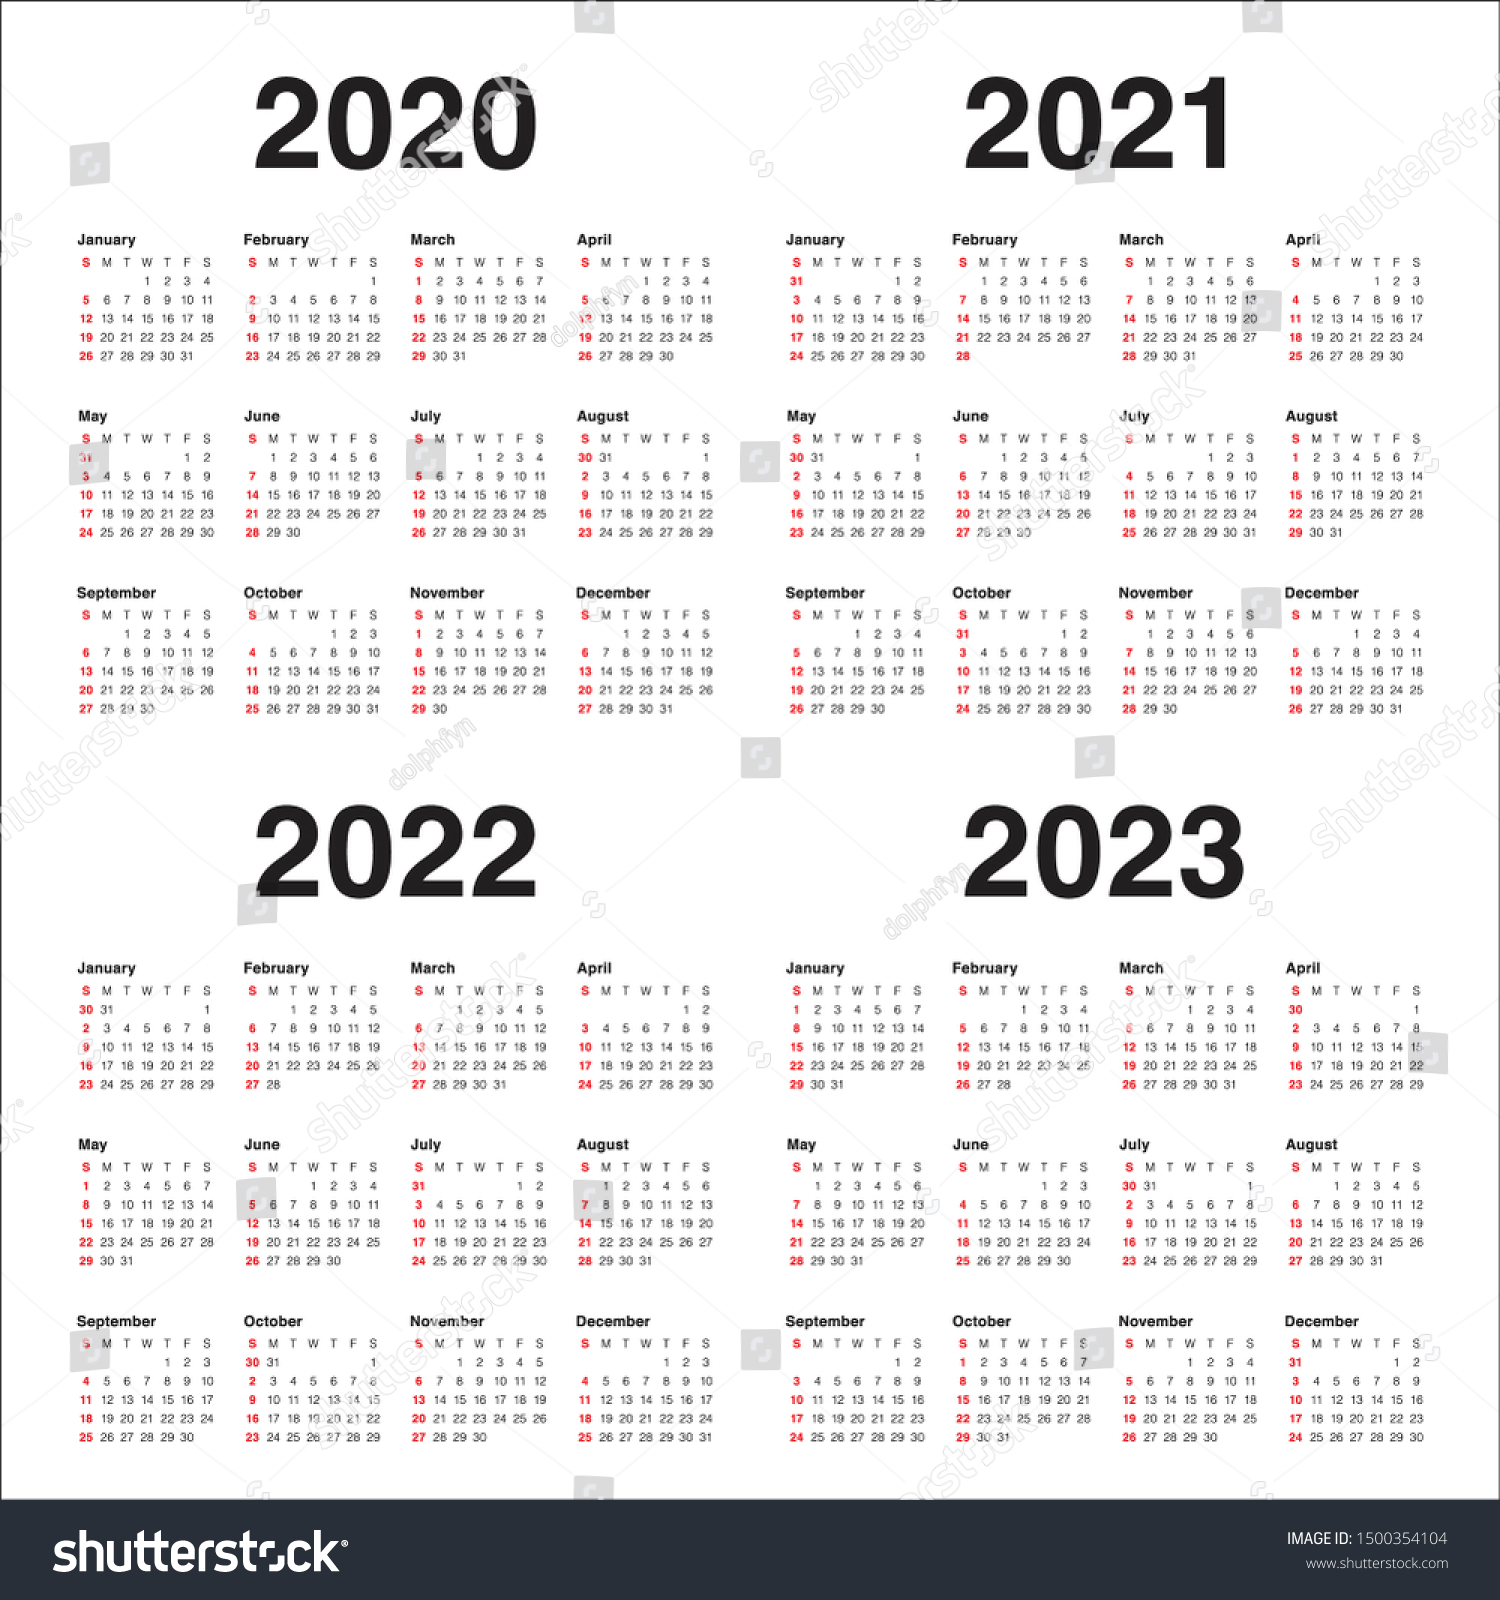 East Brunswick Calendar 2022-2023 - academic calendar 2022